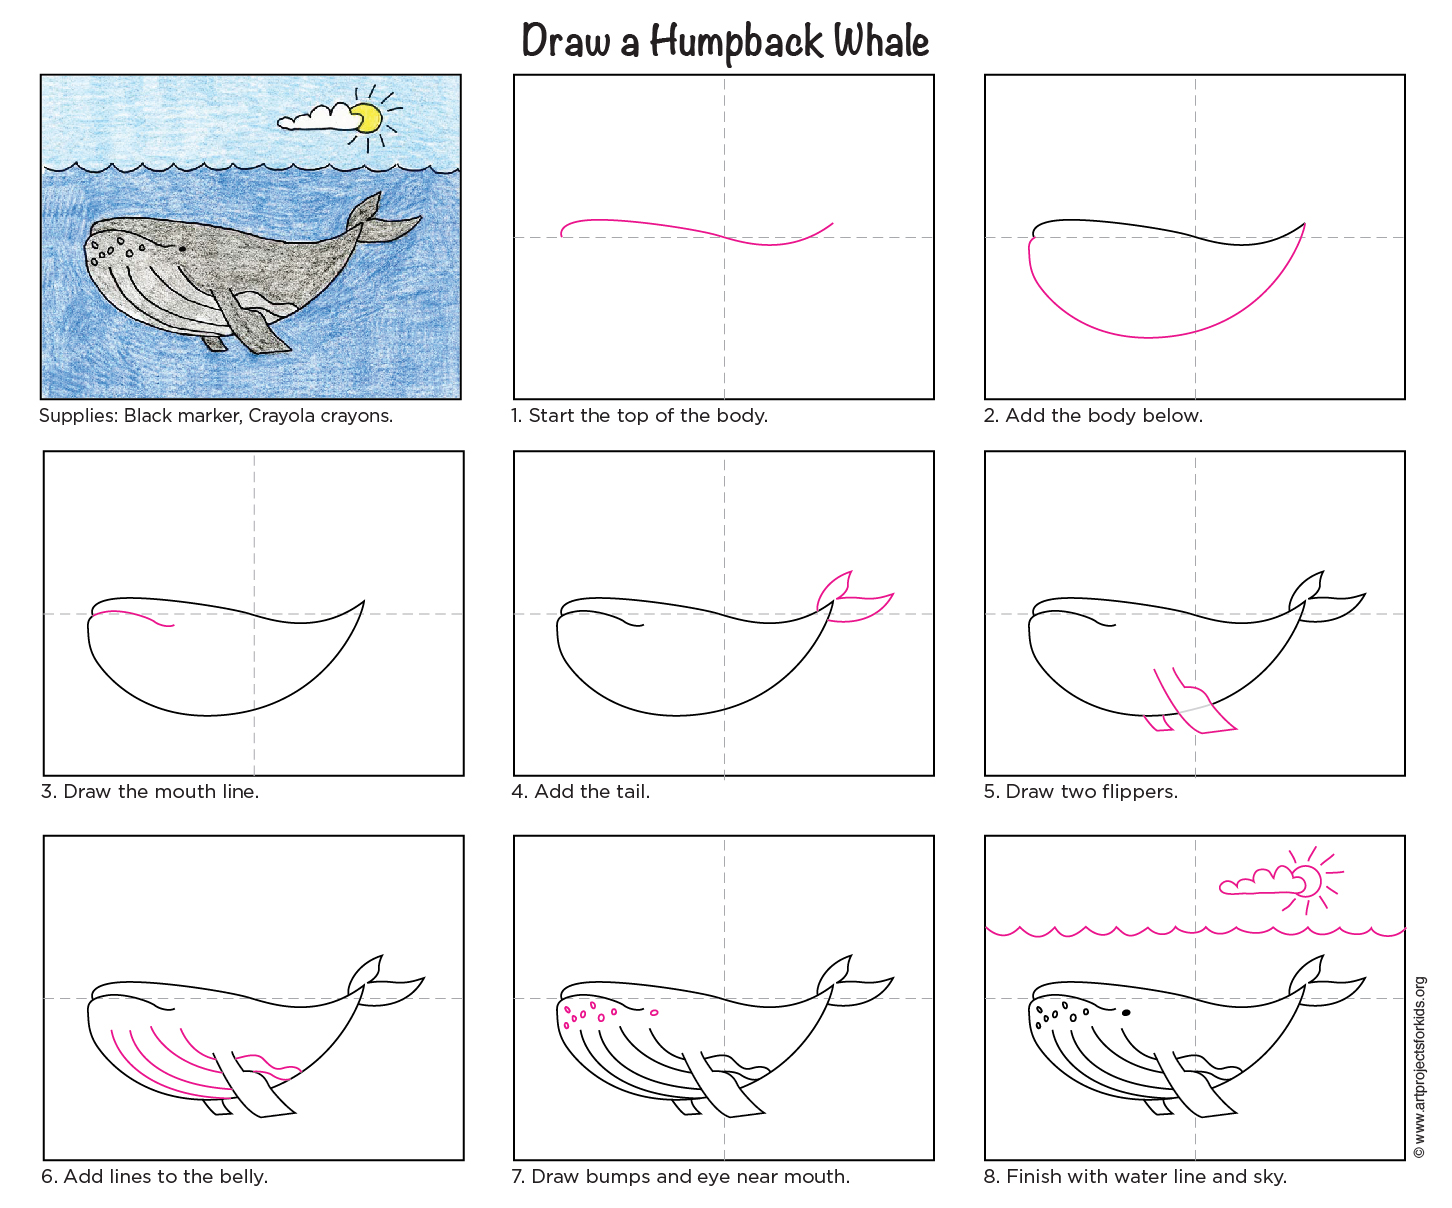 Draw a Humpback Whale bethanybnichols